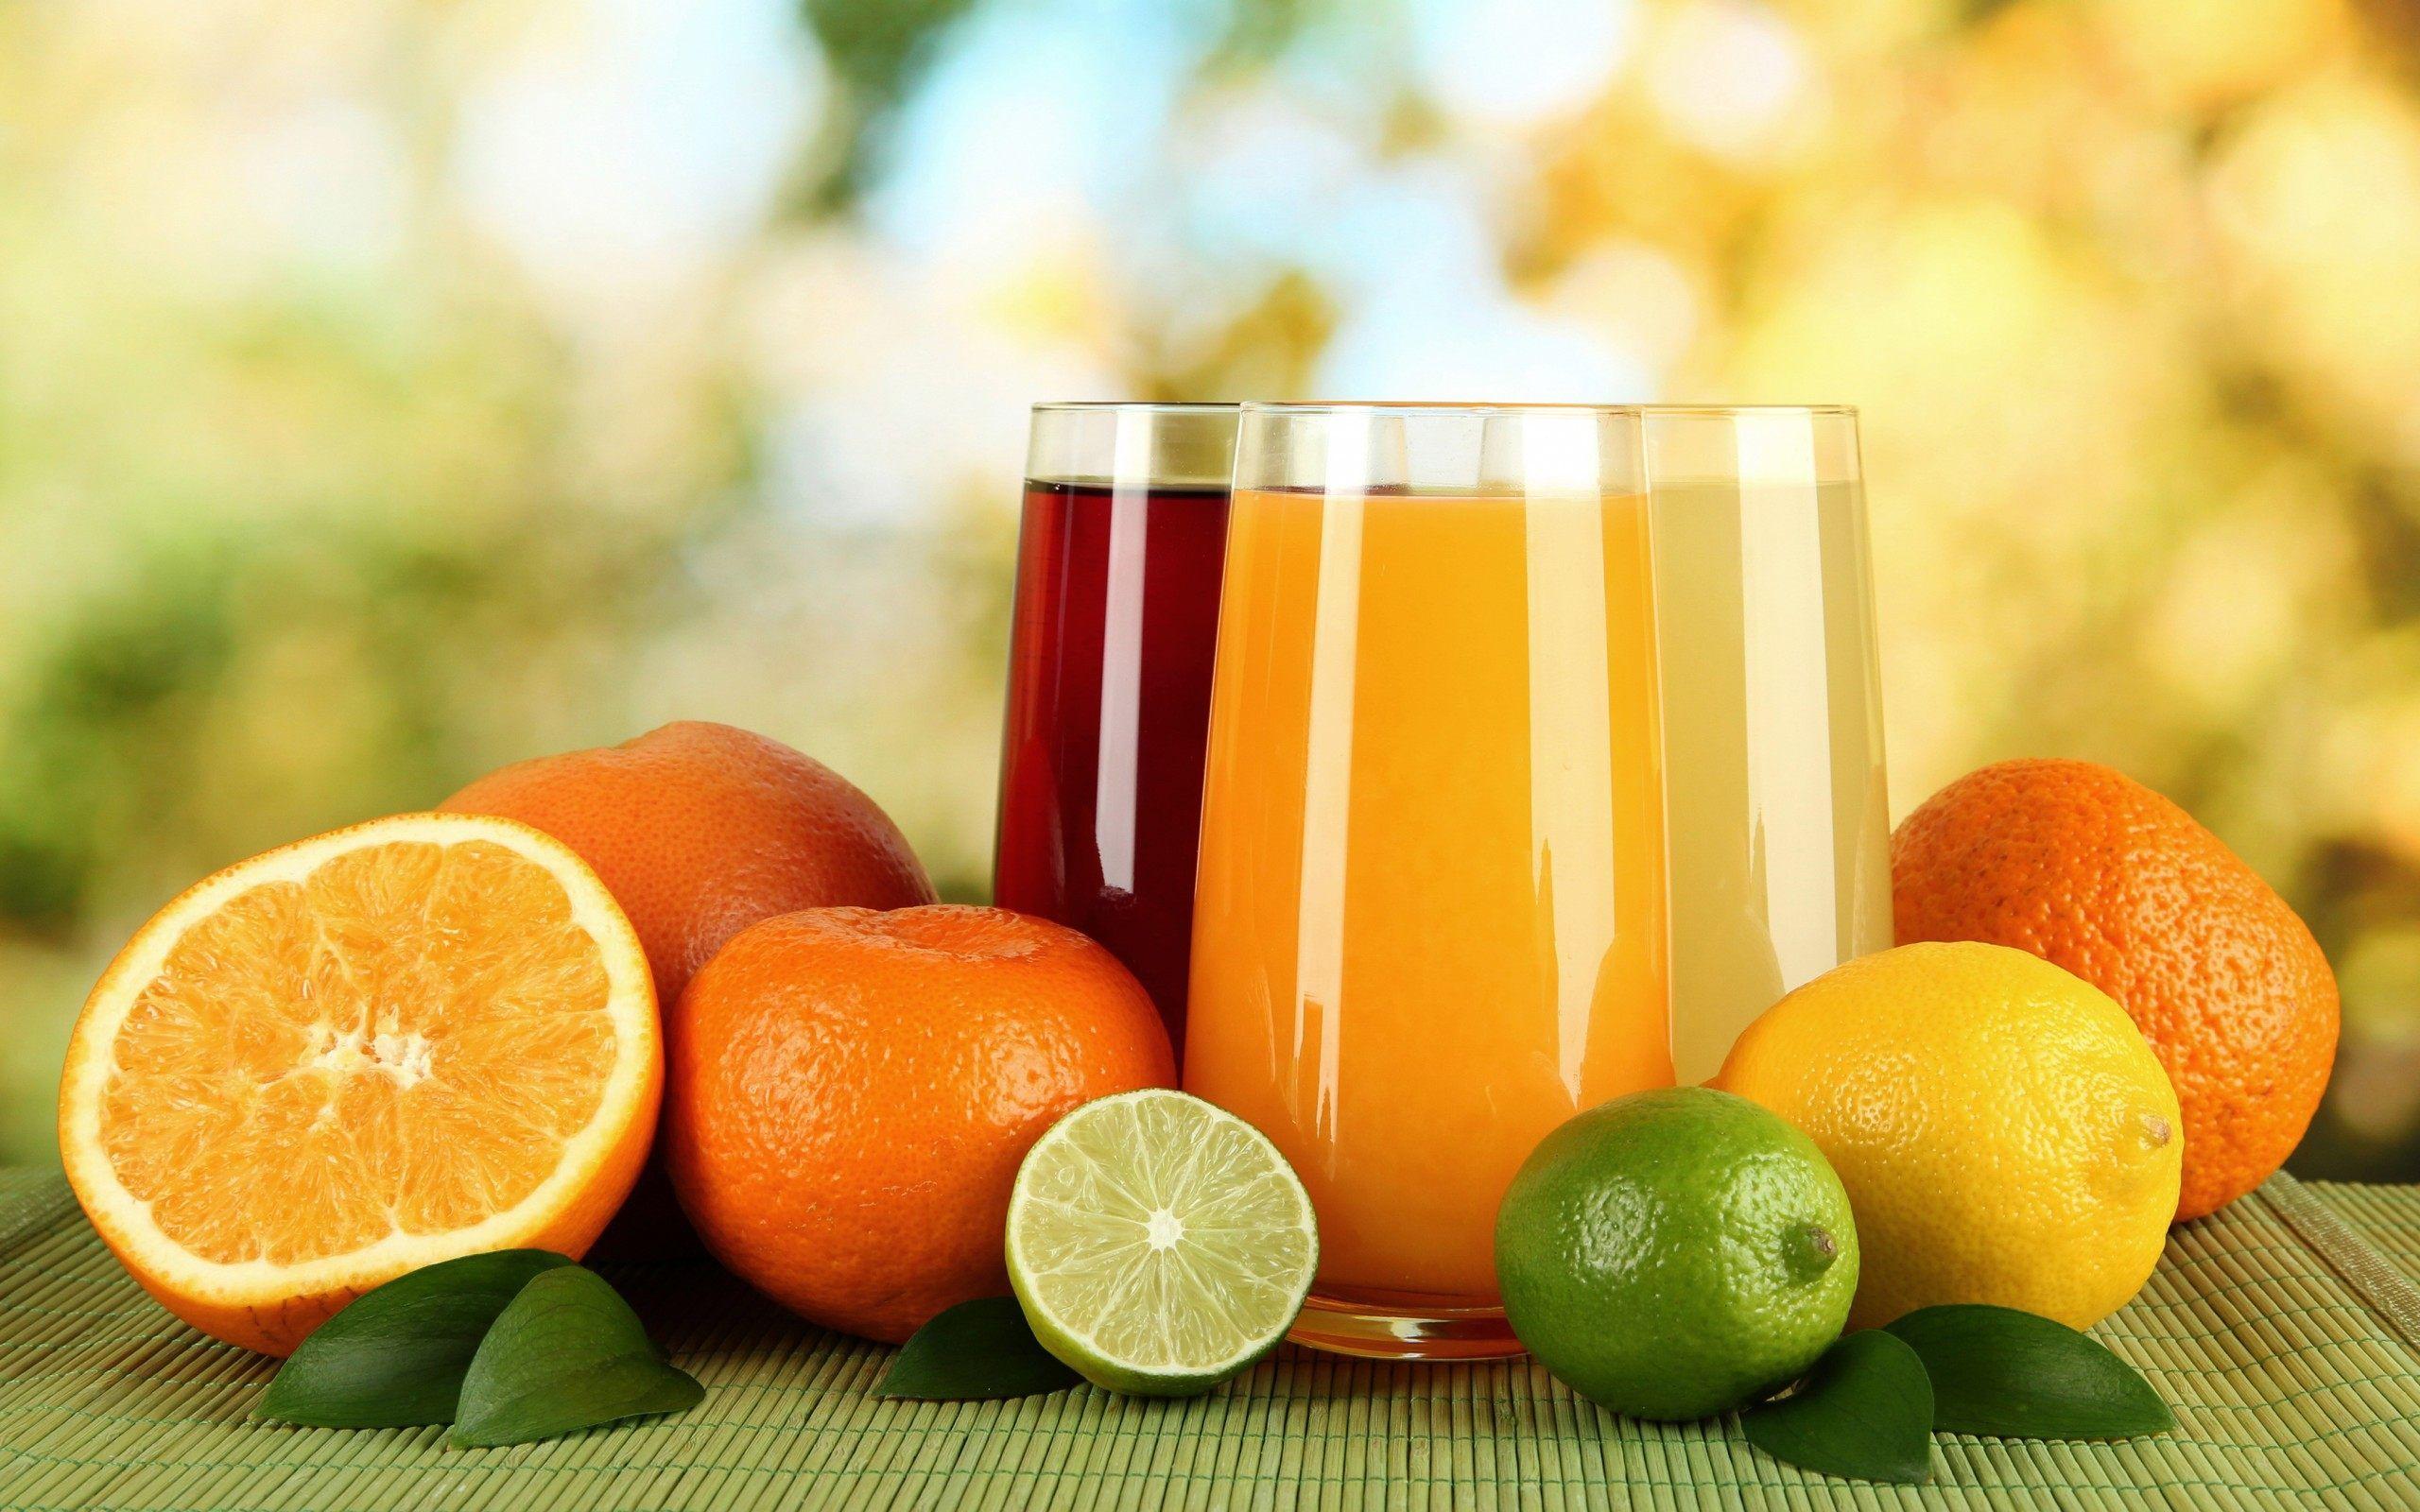 Fruit Juices HD Wallpaper Free Download For Desktop. ayin. Healthy